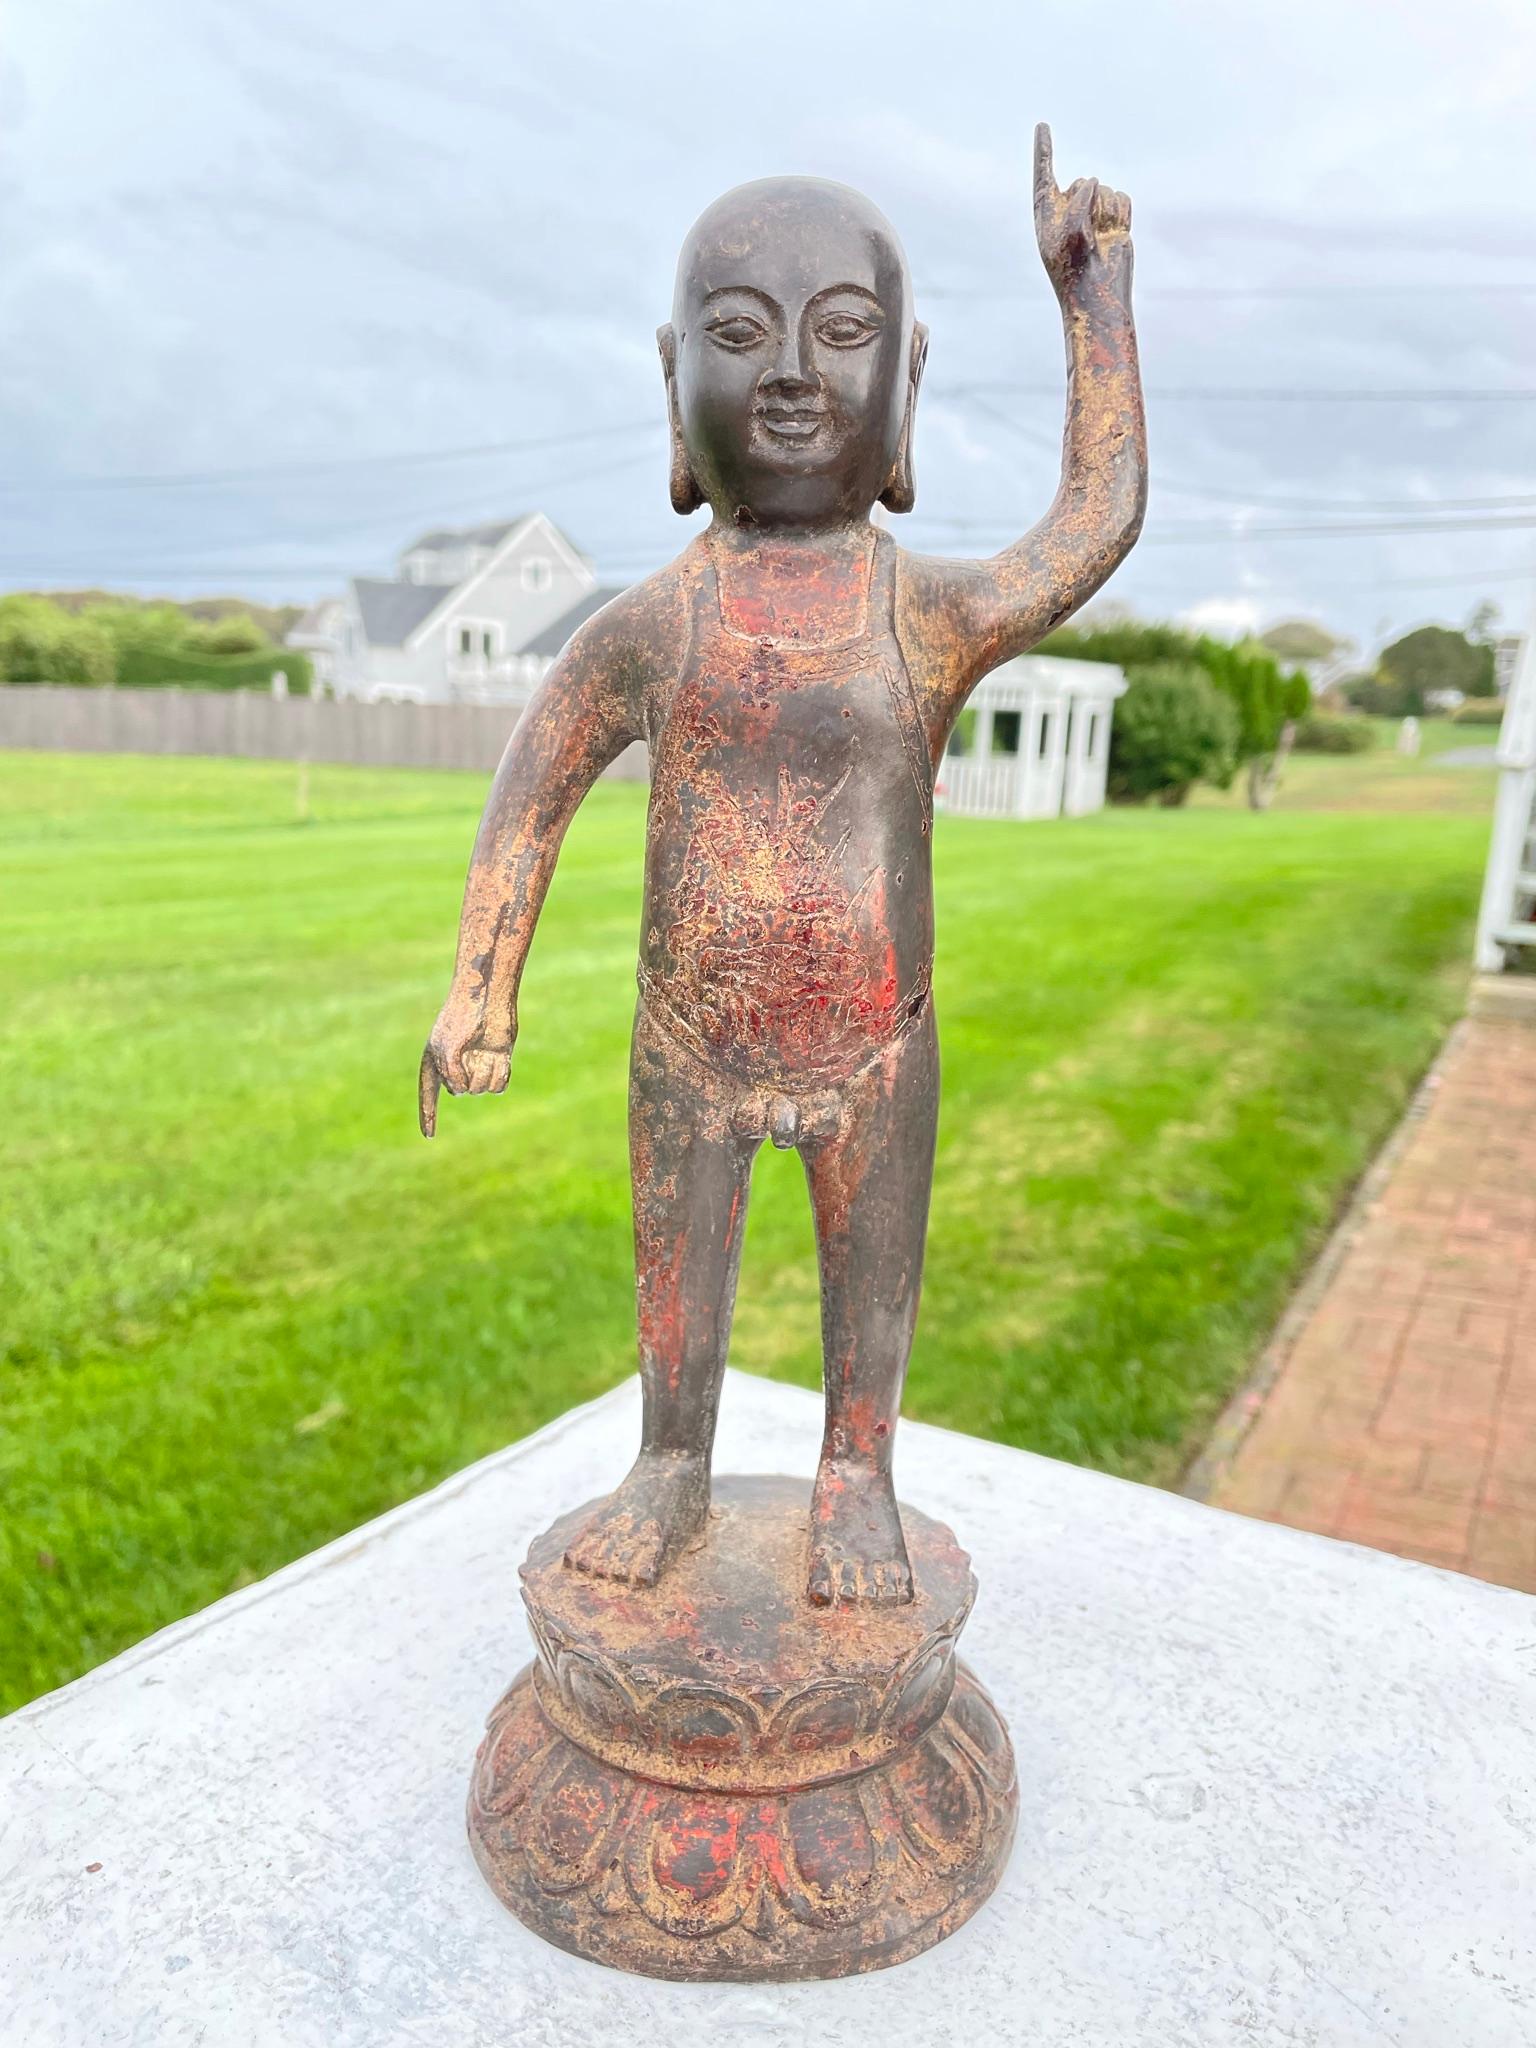 Japan, a hard to find old vintage hand cast bronze sculpture of the 